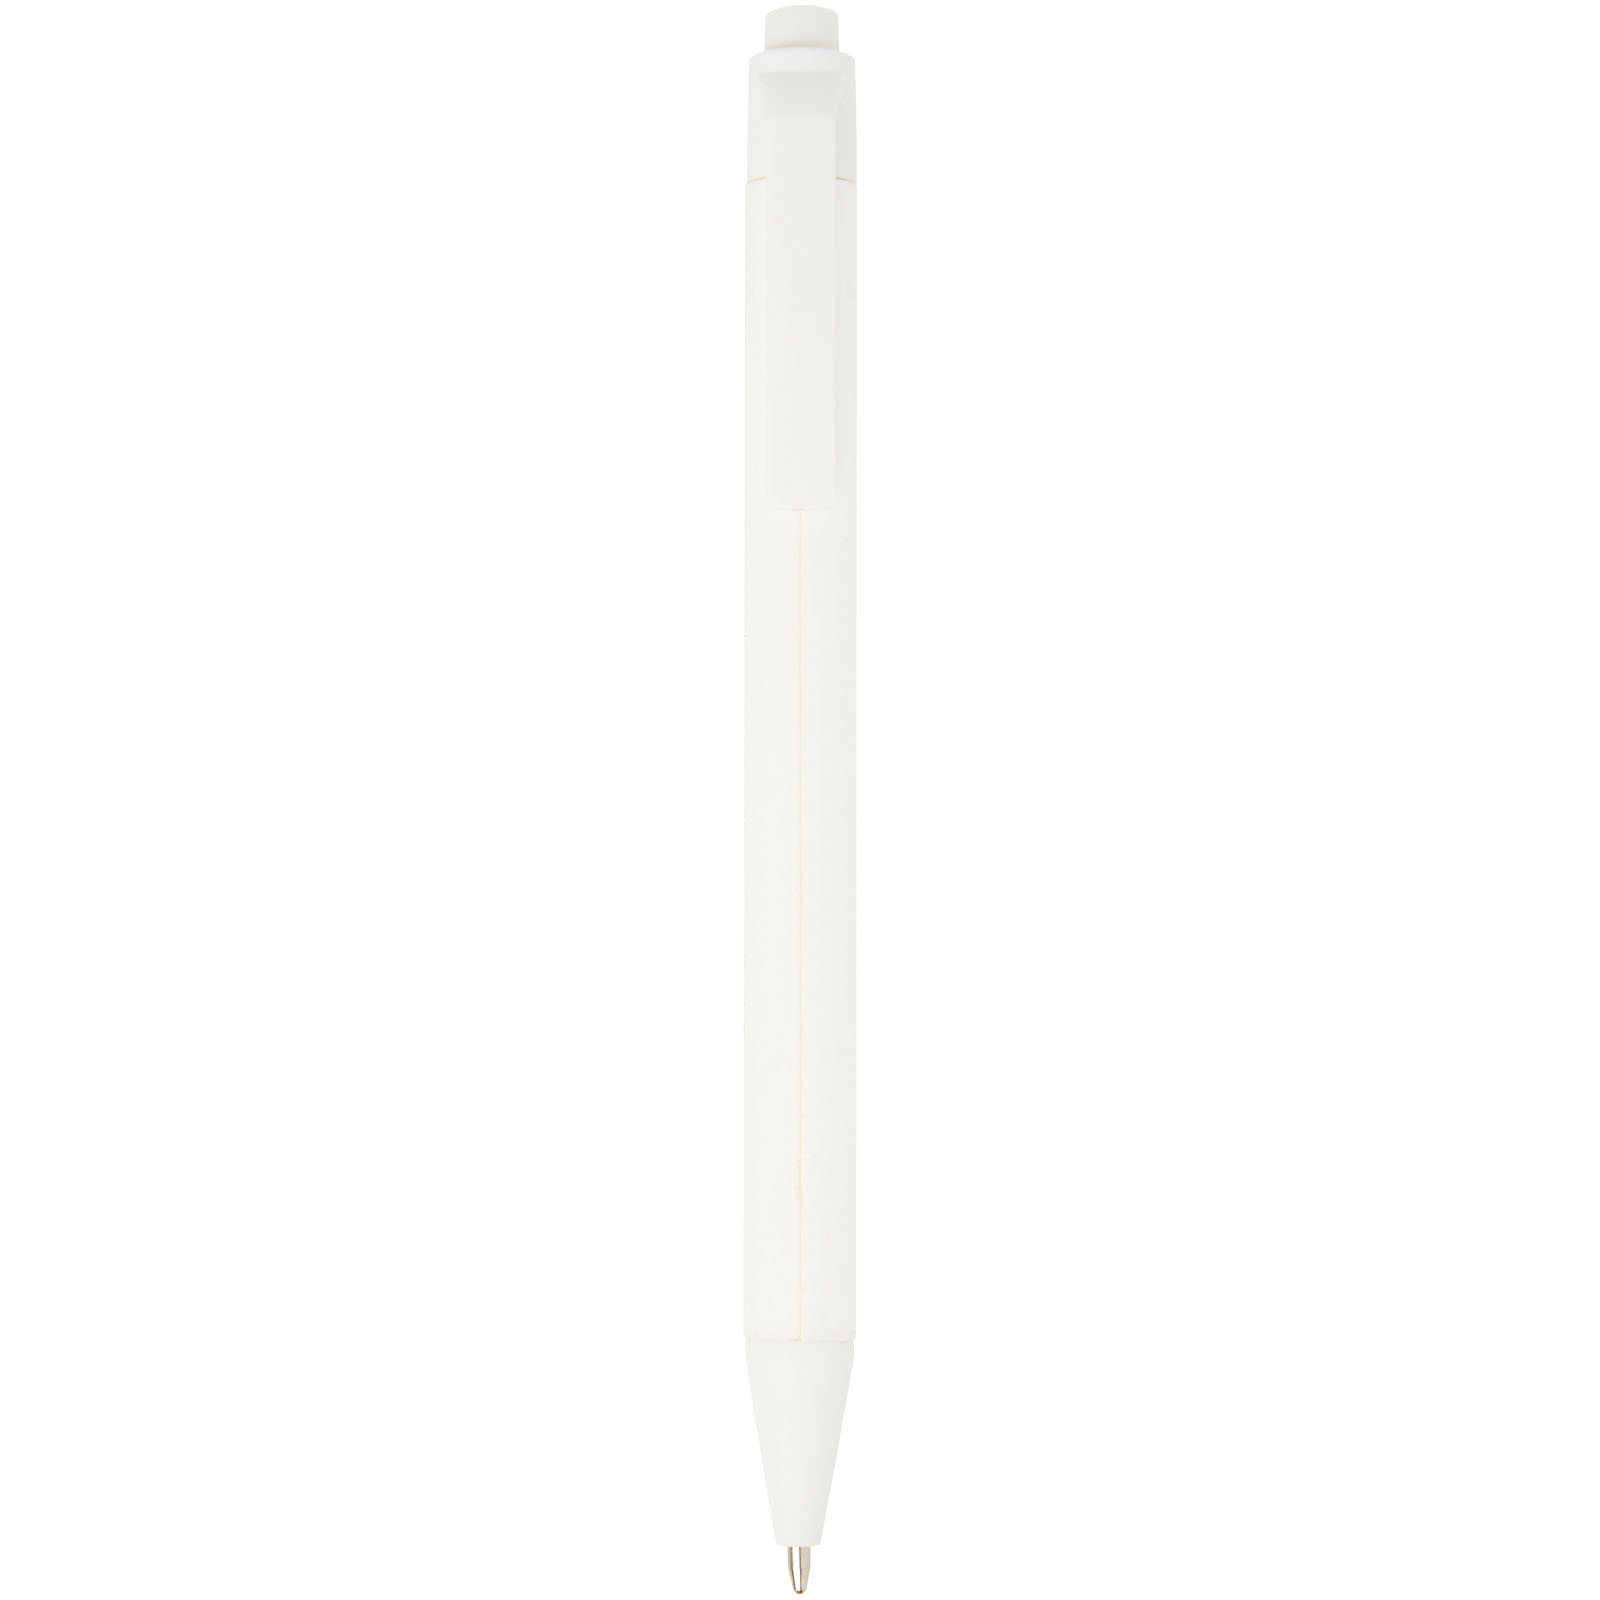 Advertising Ballpoint Pens - Chartik monochromatic recycled paper ballpoint pen with matte finish - 0